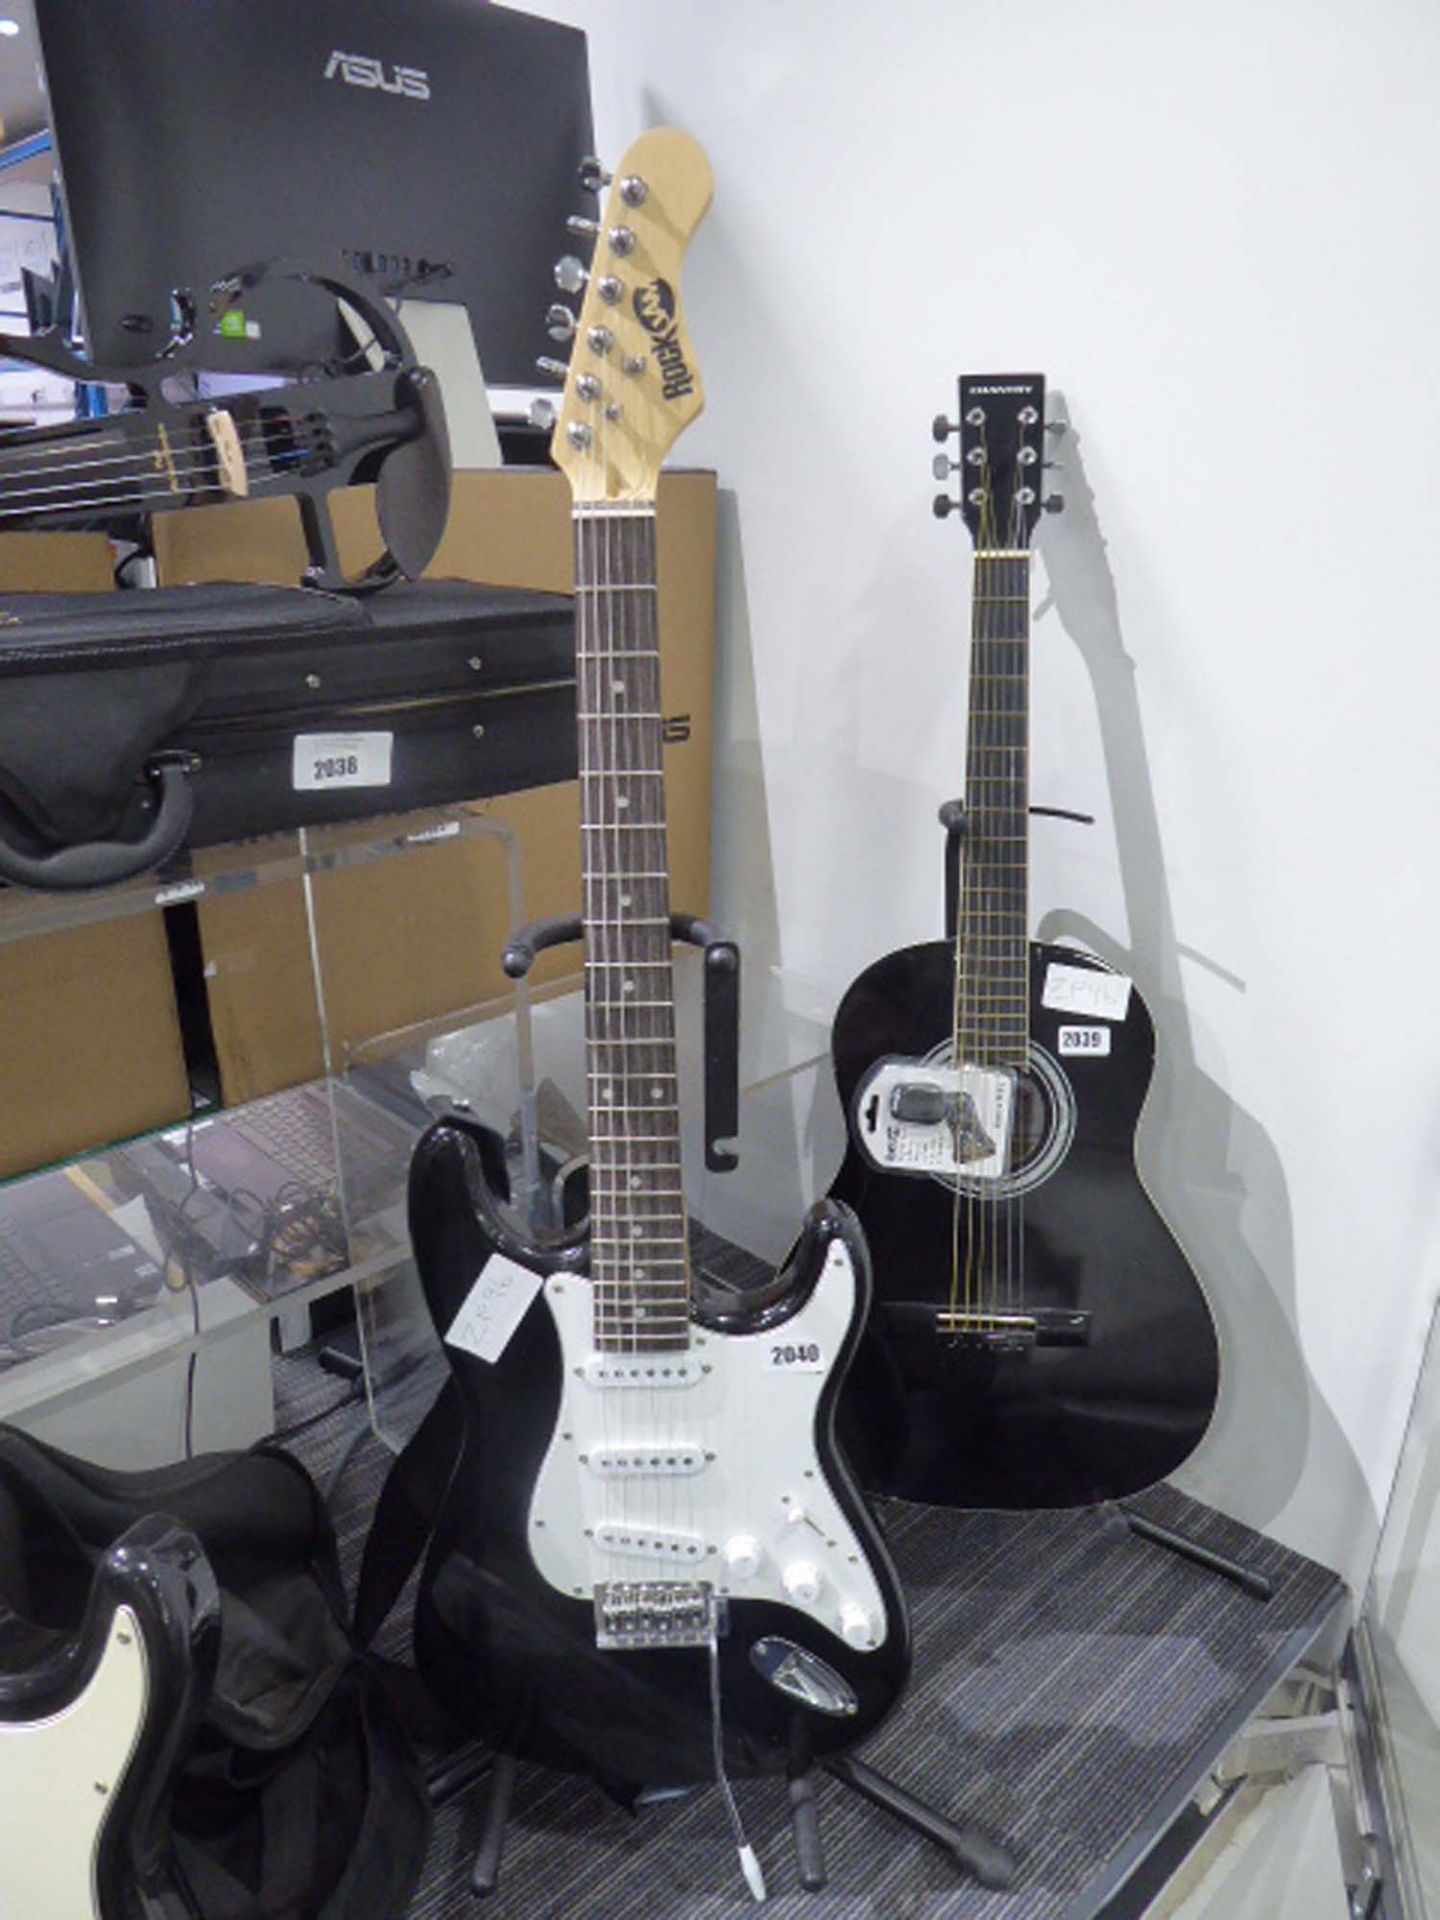 Rockjam 6 string electric black and white finish guitar